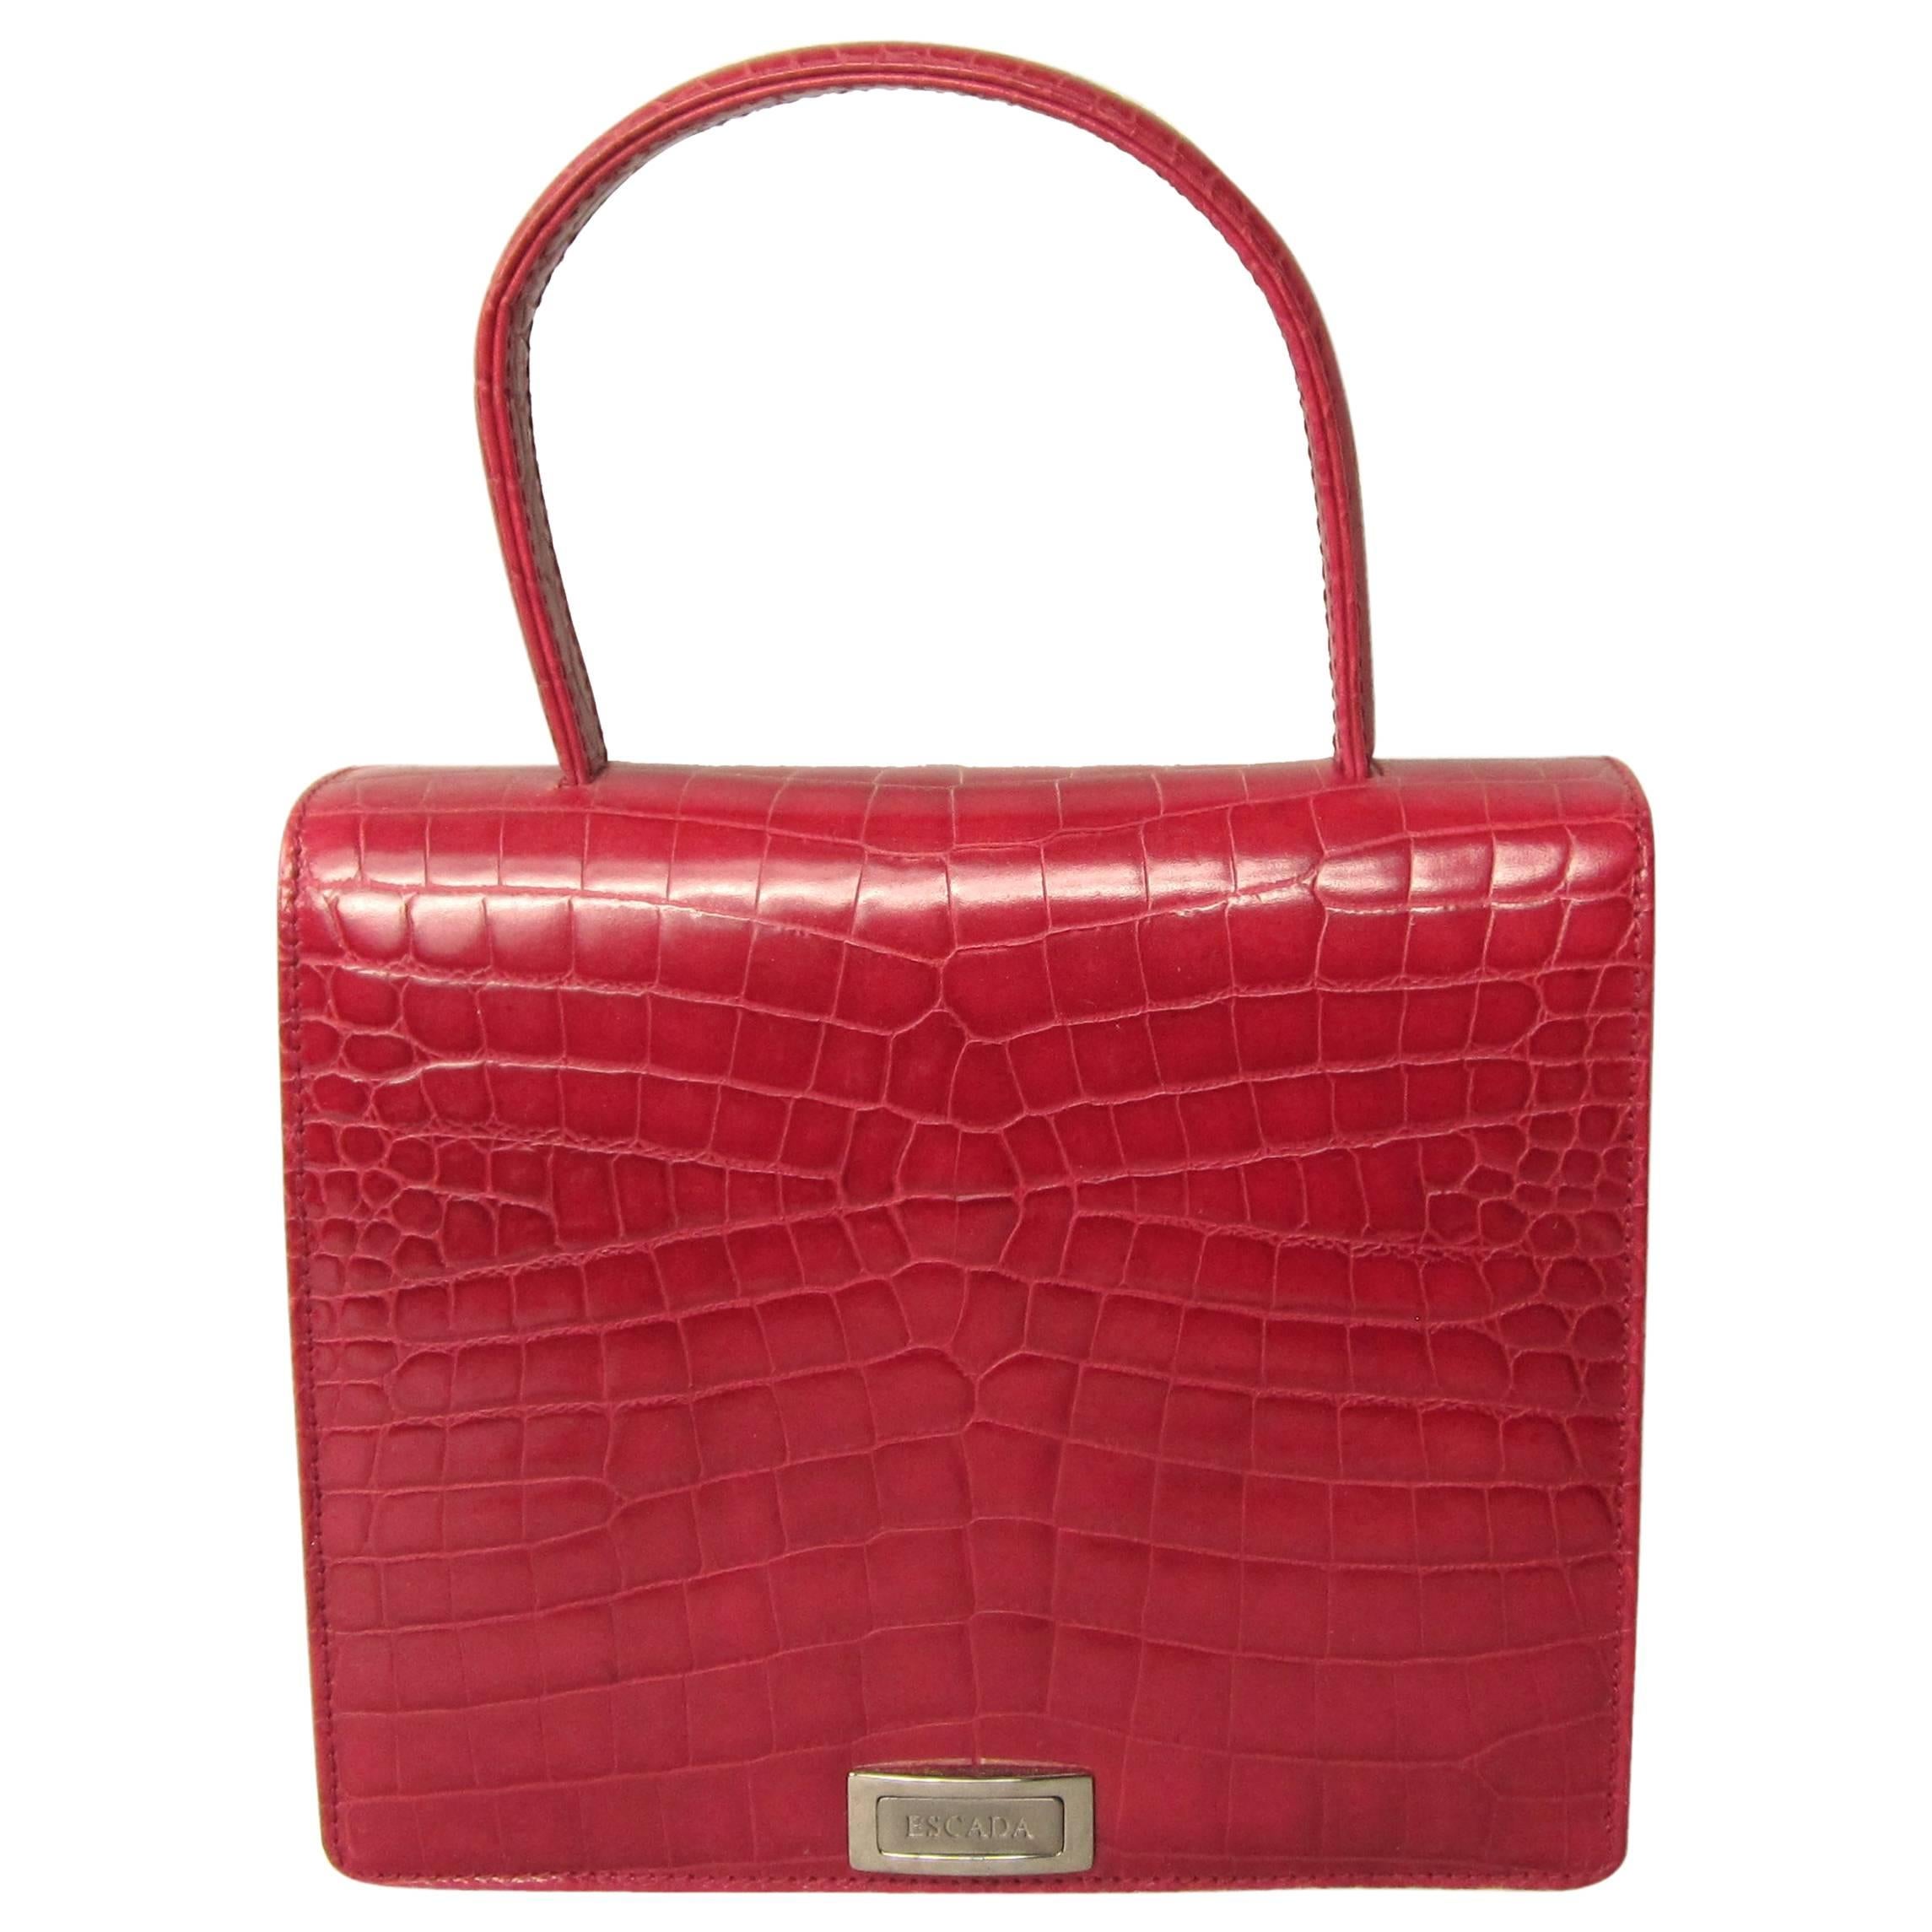 Deep Red Croc Embossed Leather Escada Kelly Handbag 1980s New, Never Worn